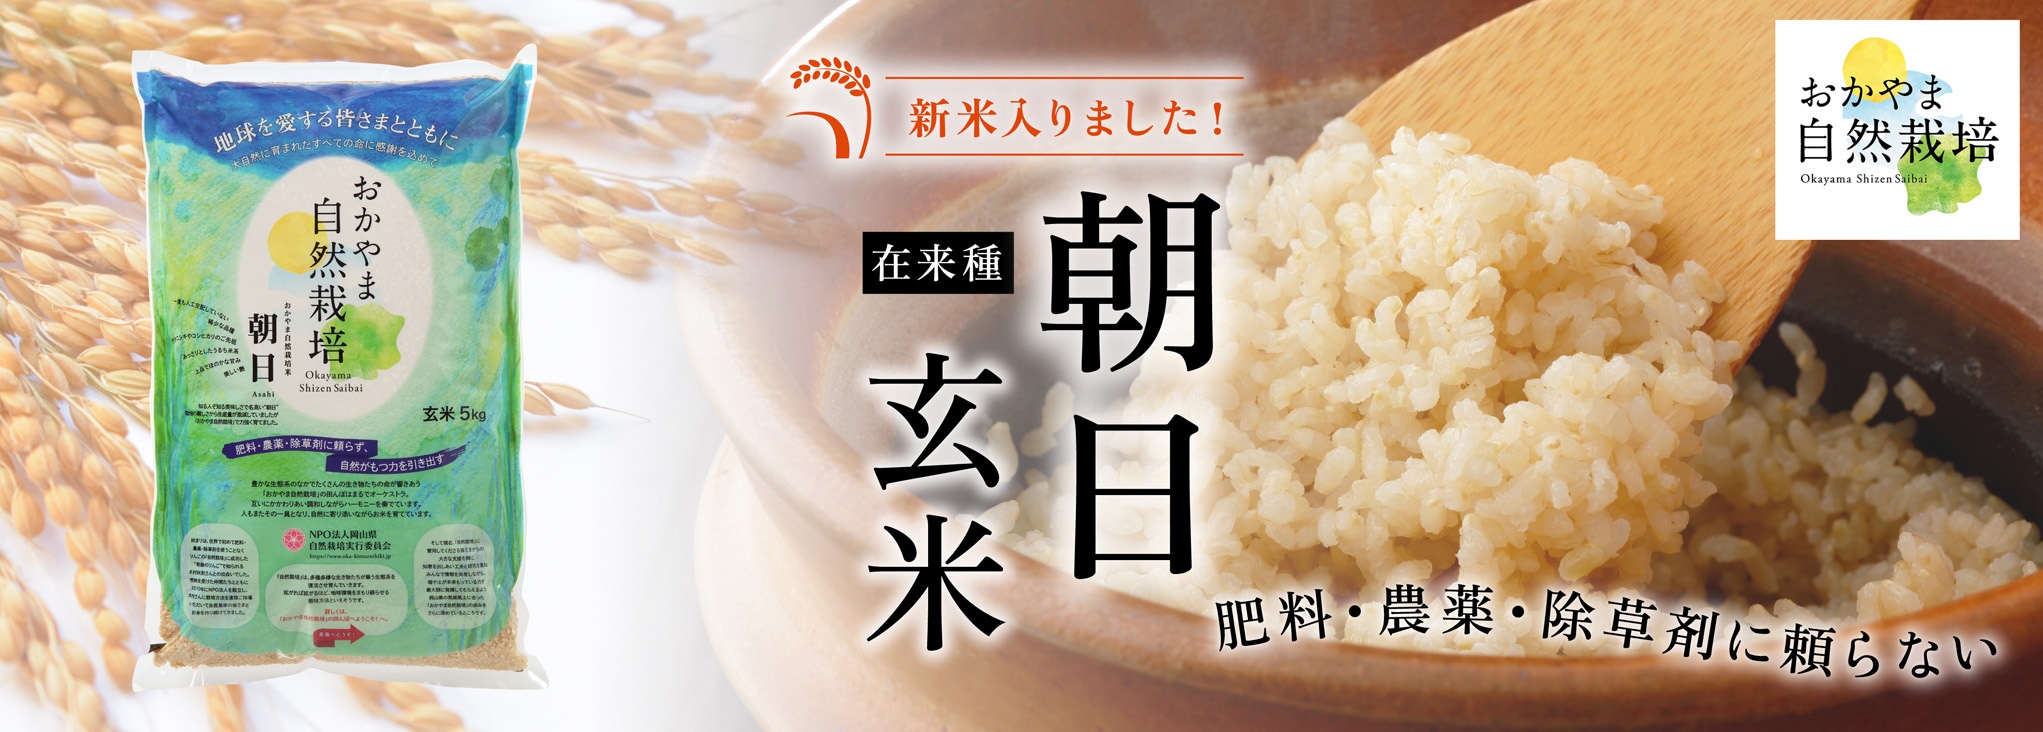 岡山県産 幻の朝日米 令和5年産玄米10キロ - 米・雑穀・粉類